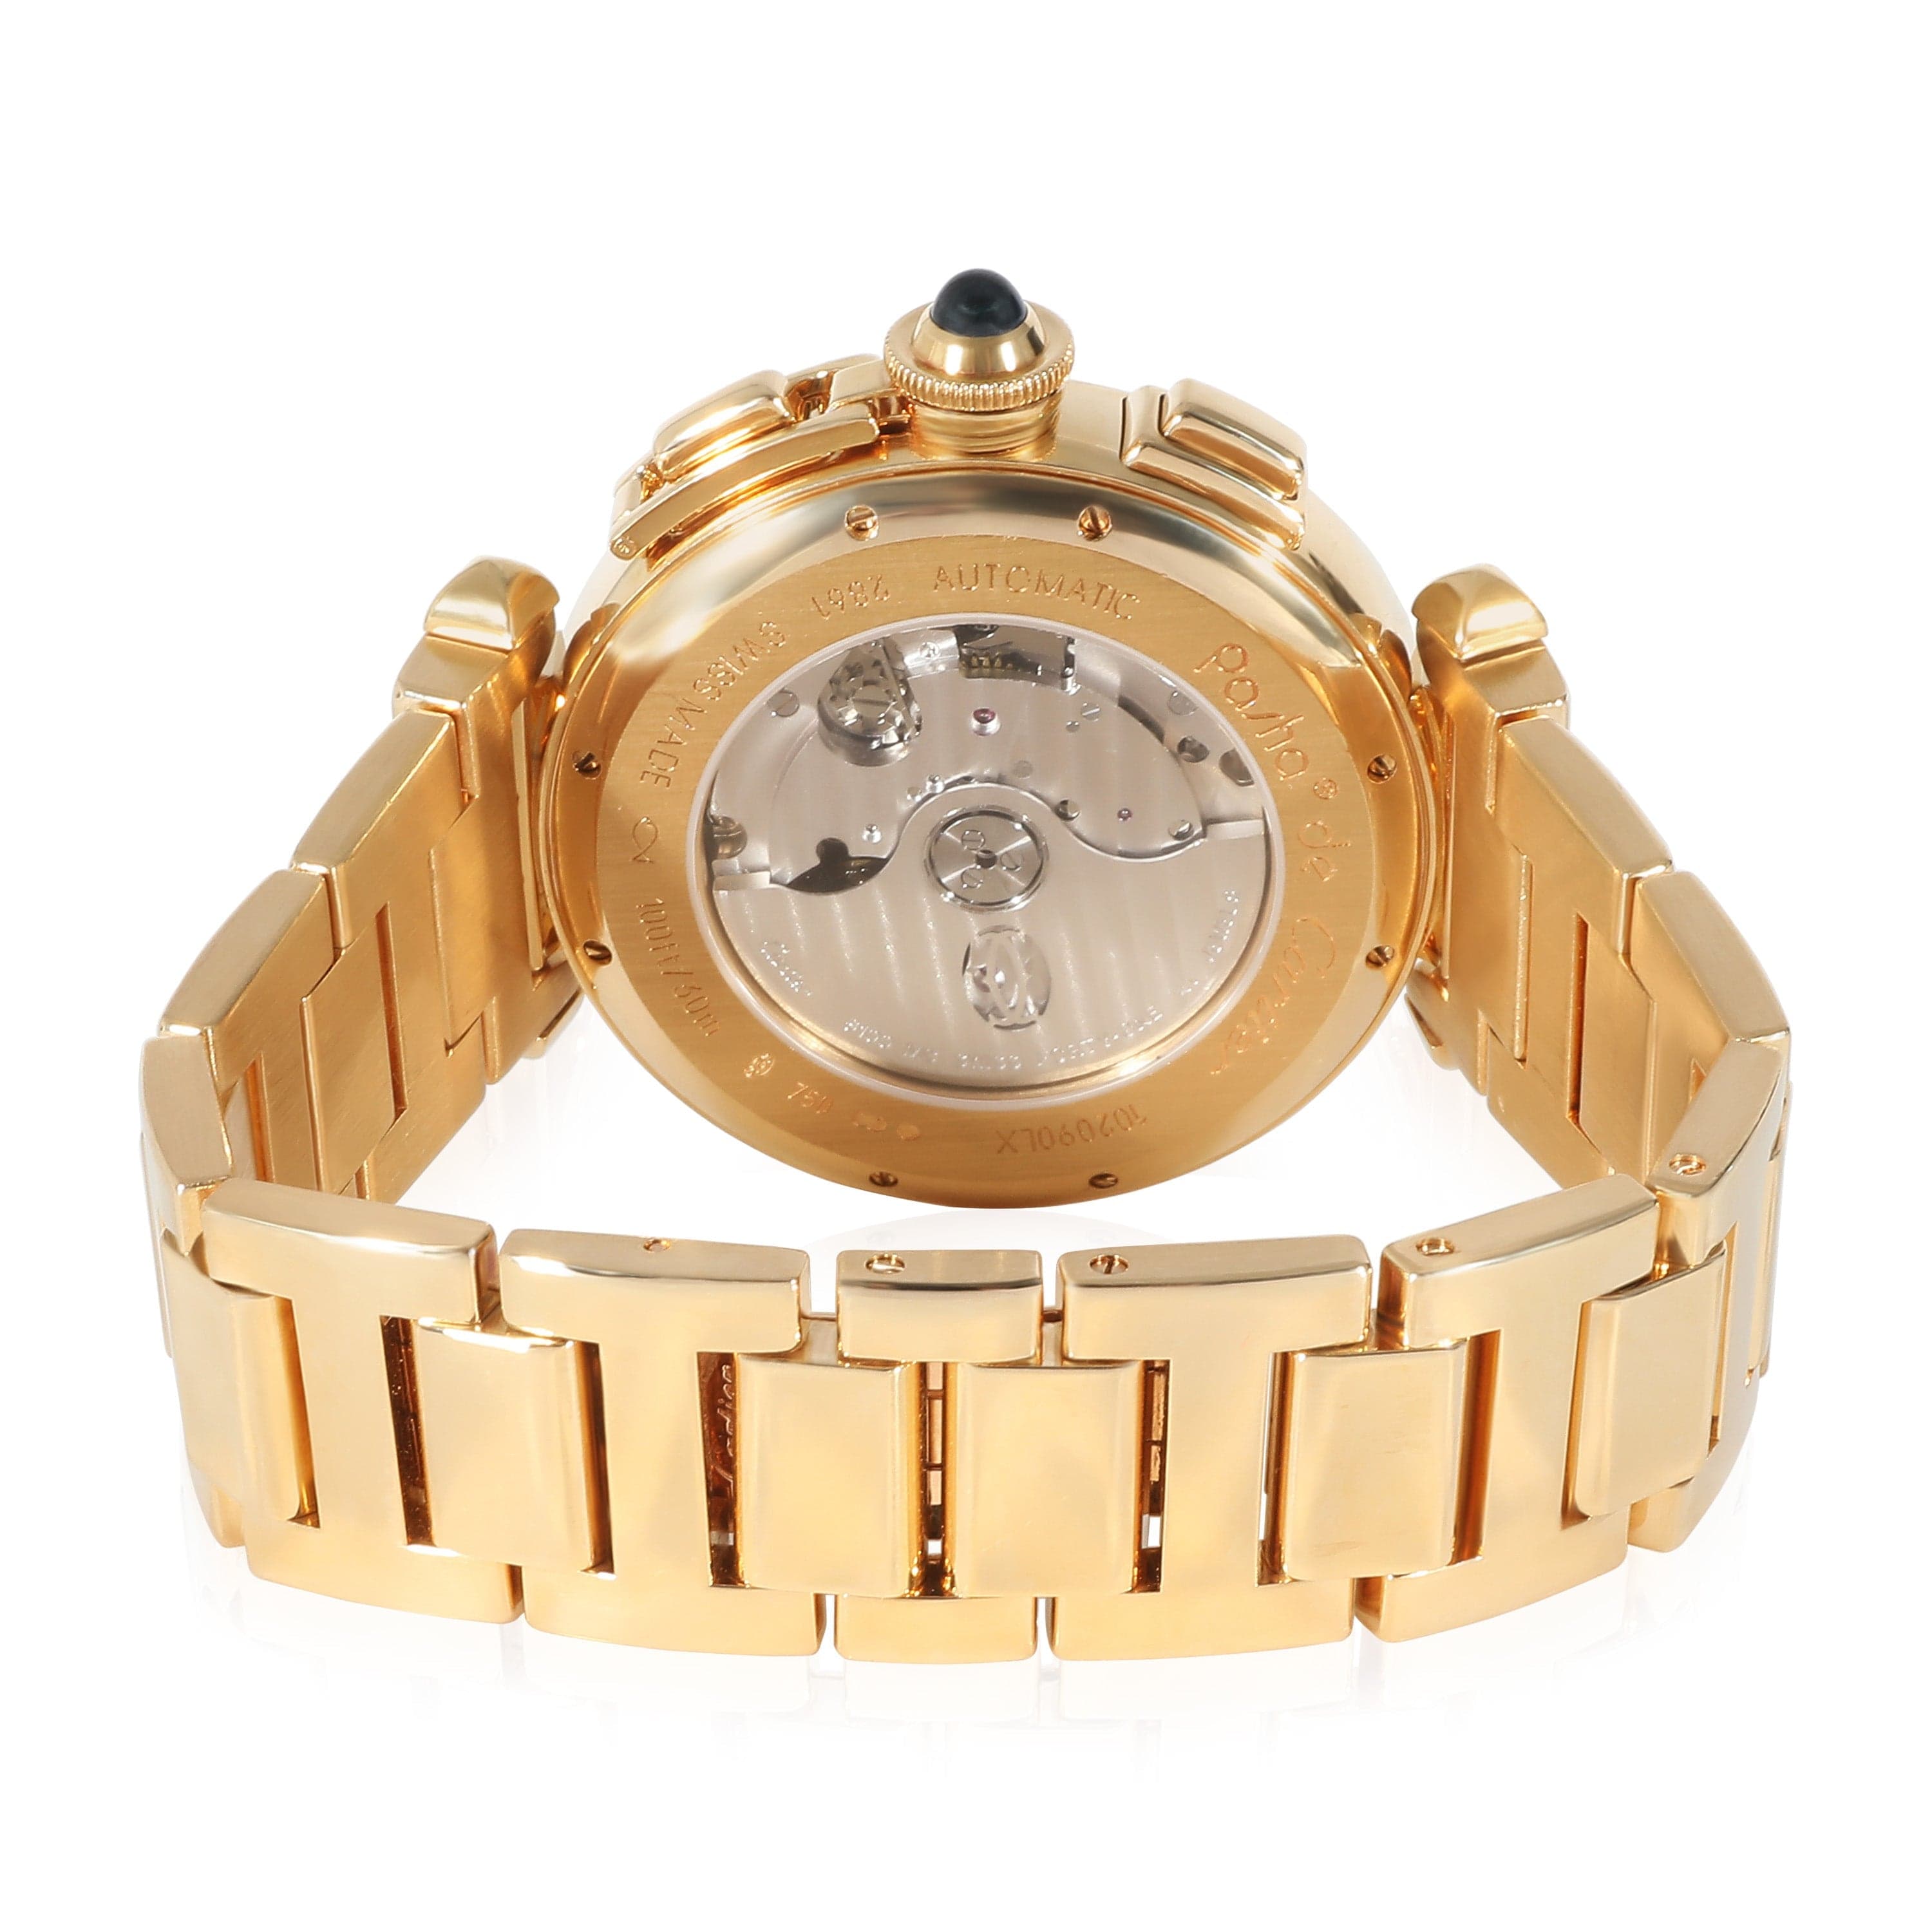 Cartier Cartier Pasha W30201H9 Men's Watch in 18kt Yellow Gold